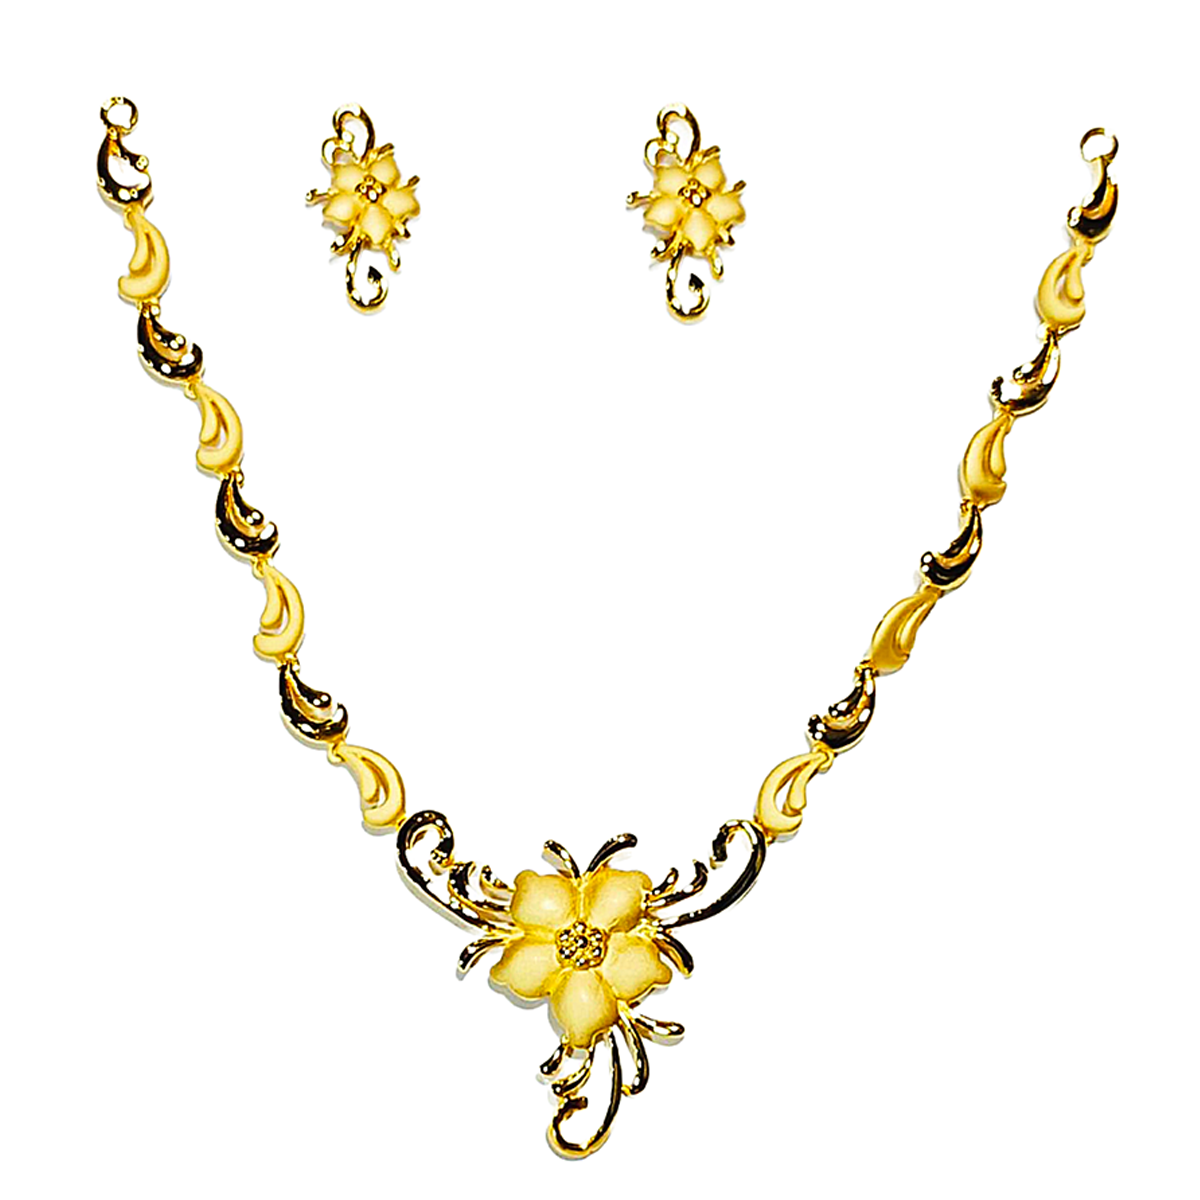 Floweree gold necklace set